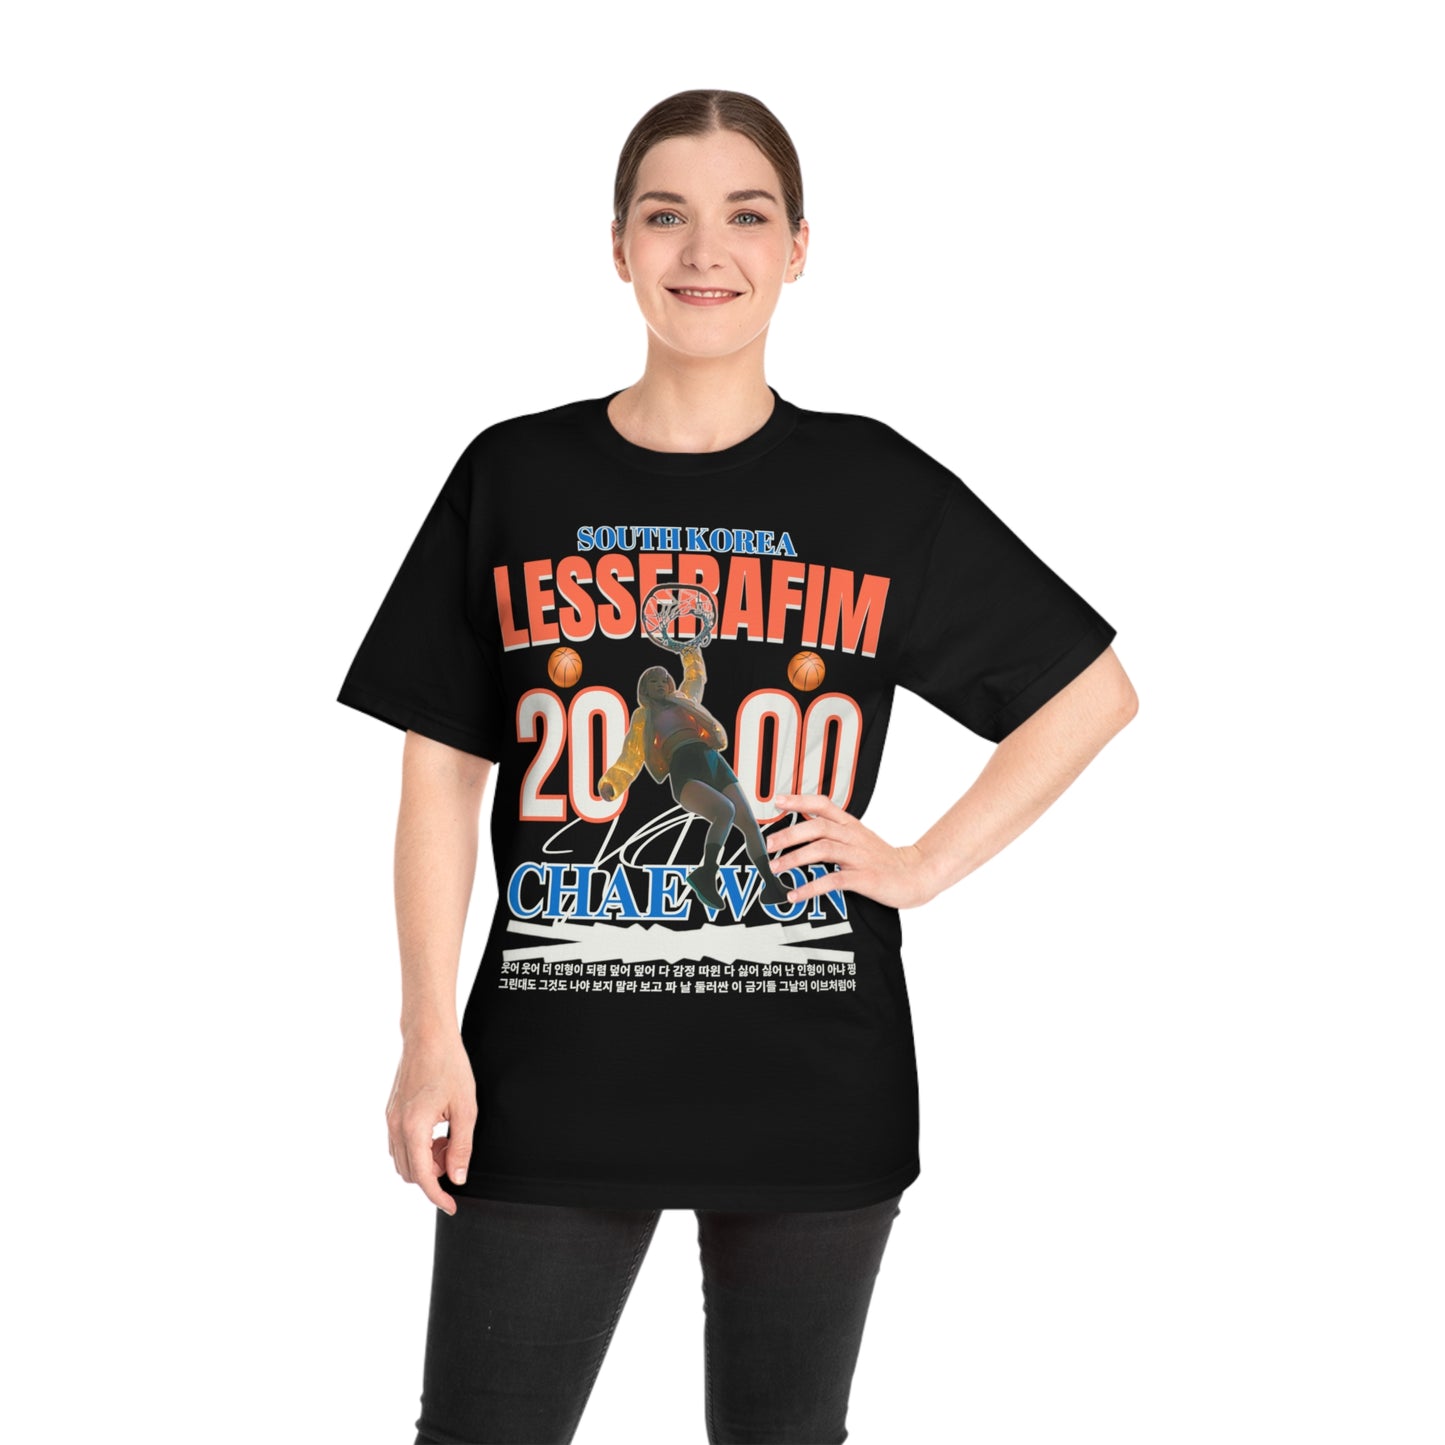 Lesserafim Chaewon Sports Graphic T-shirt